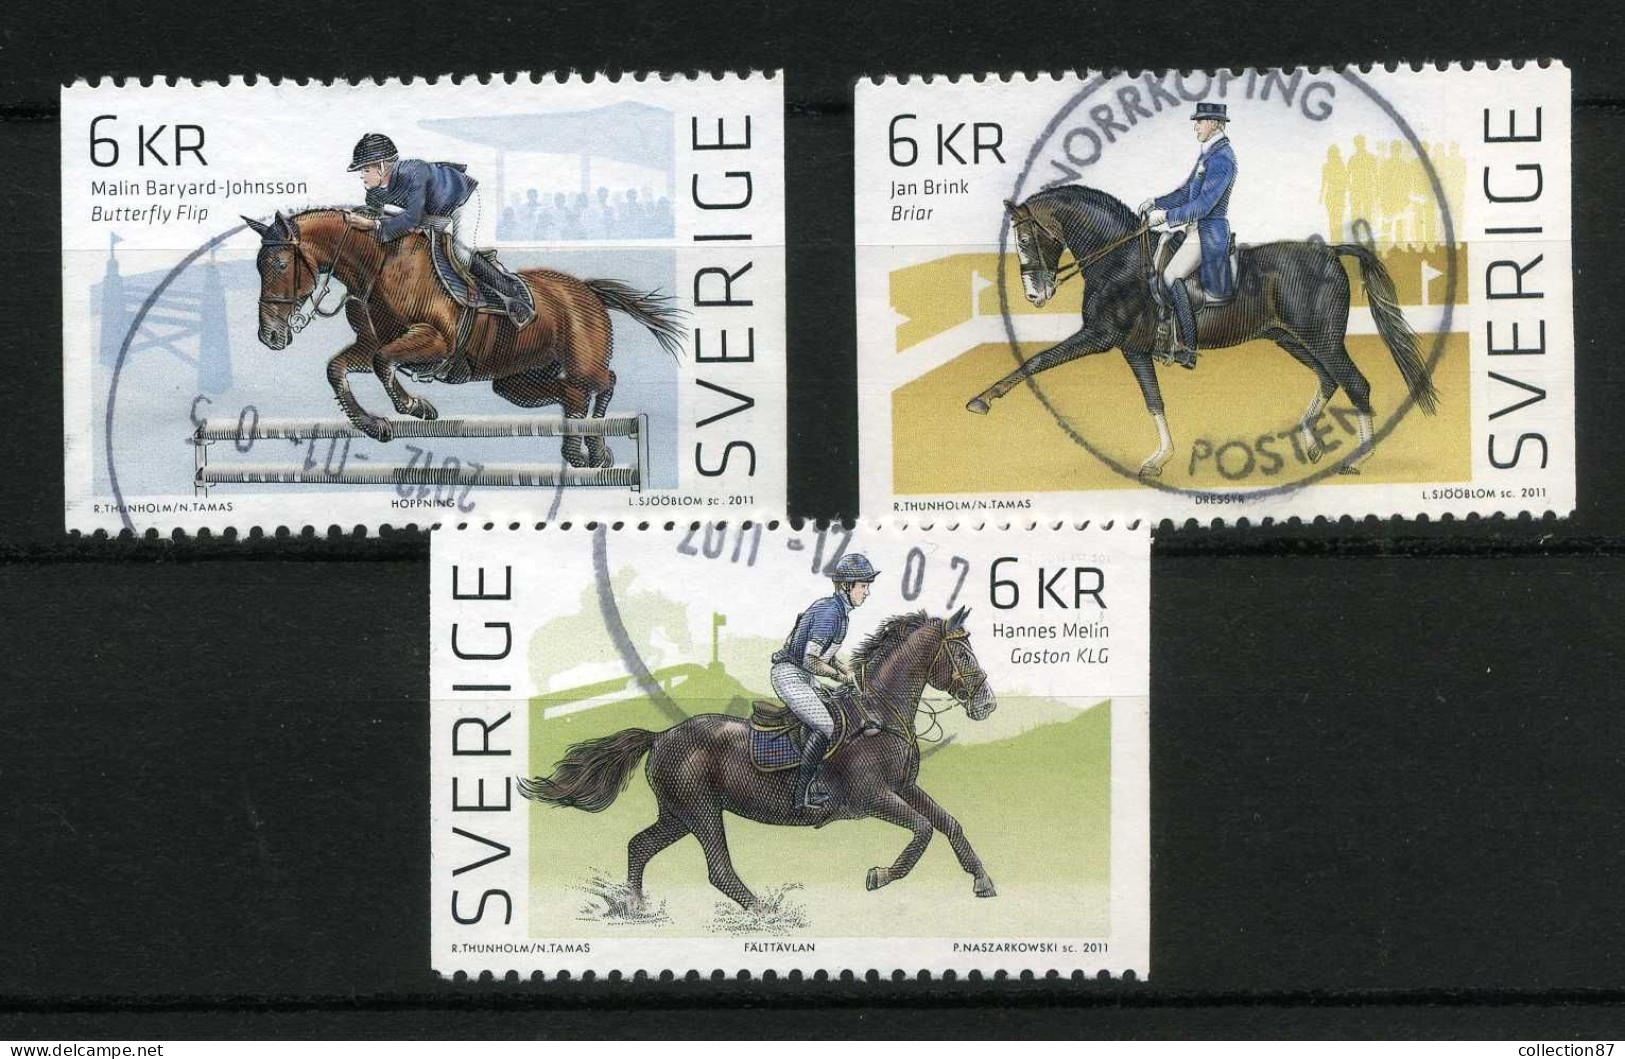 Réf 77 < -- SUEDE 2011 < Yvert N° 2819+2821+2822 Ø < Mi 2844/6/7 Ø Used -- > Horse Cheval  Briar  Gaston  Butterfly Flip - Used Stamps